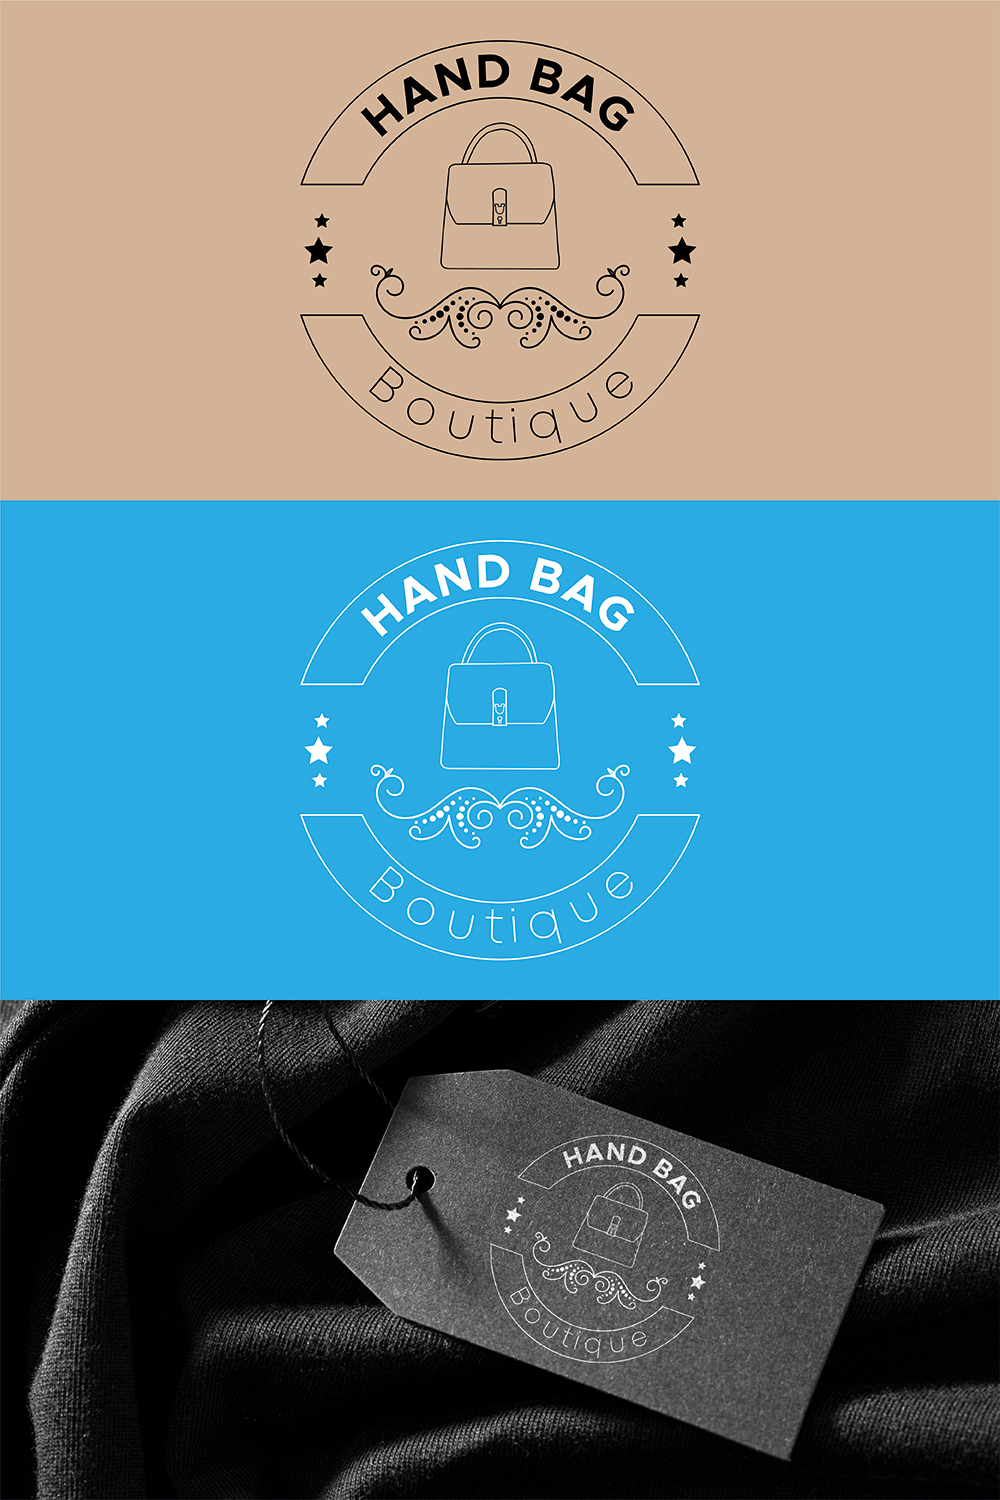 Hand Bag Boutique Logo Pinterest Image.